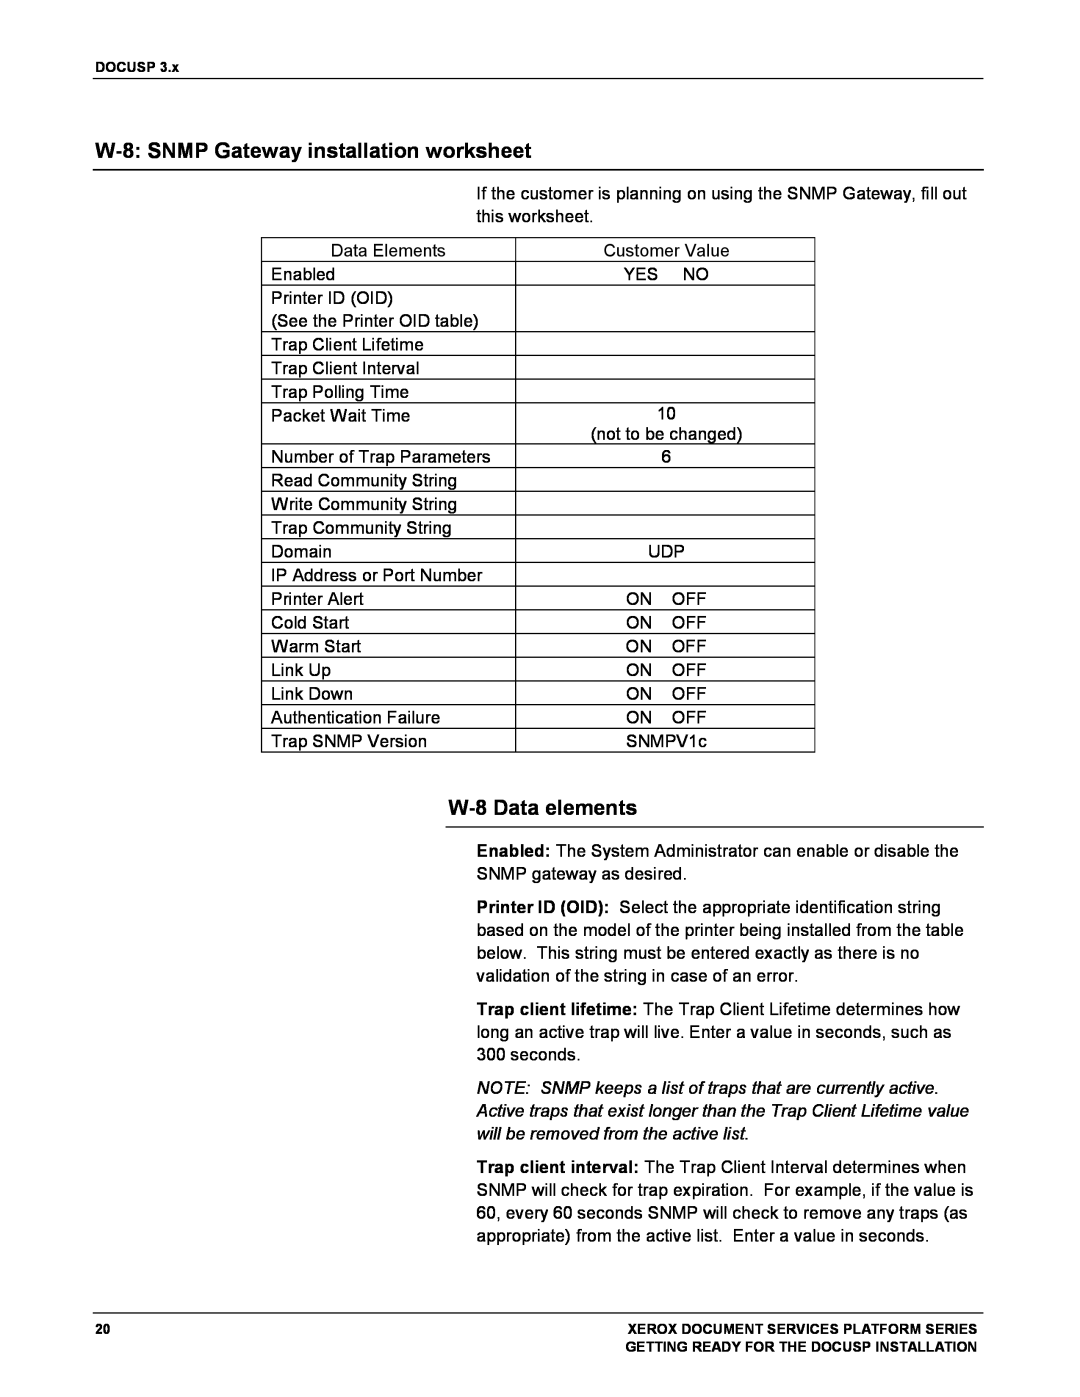 Xerox 701P38969 manual W-8:SNMP Gateway installation worksheet, W-8Data elements 